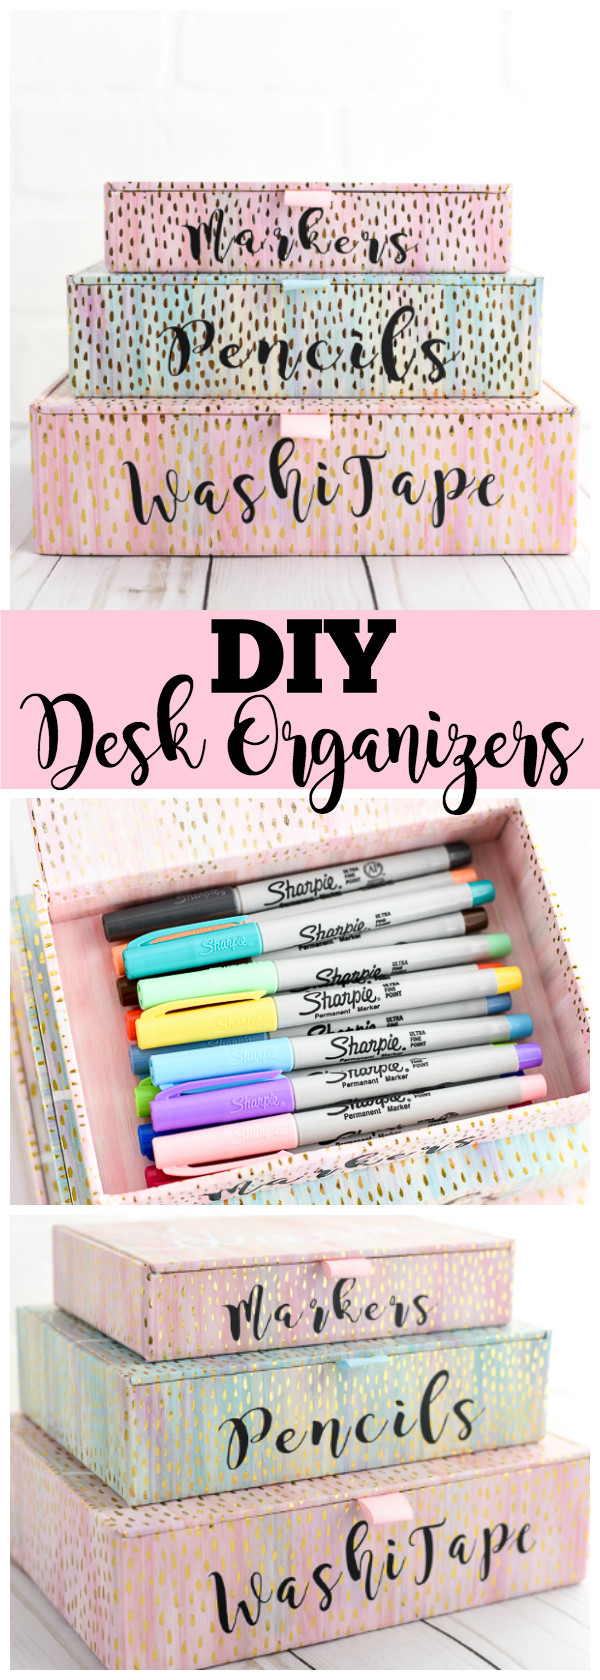 Best ideas about Desk Organization DIY
. Save or Pin DIY Desk Organizers Now.